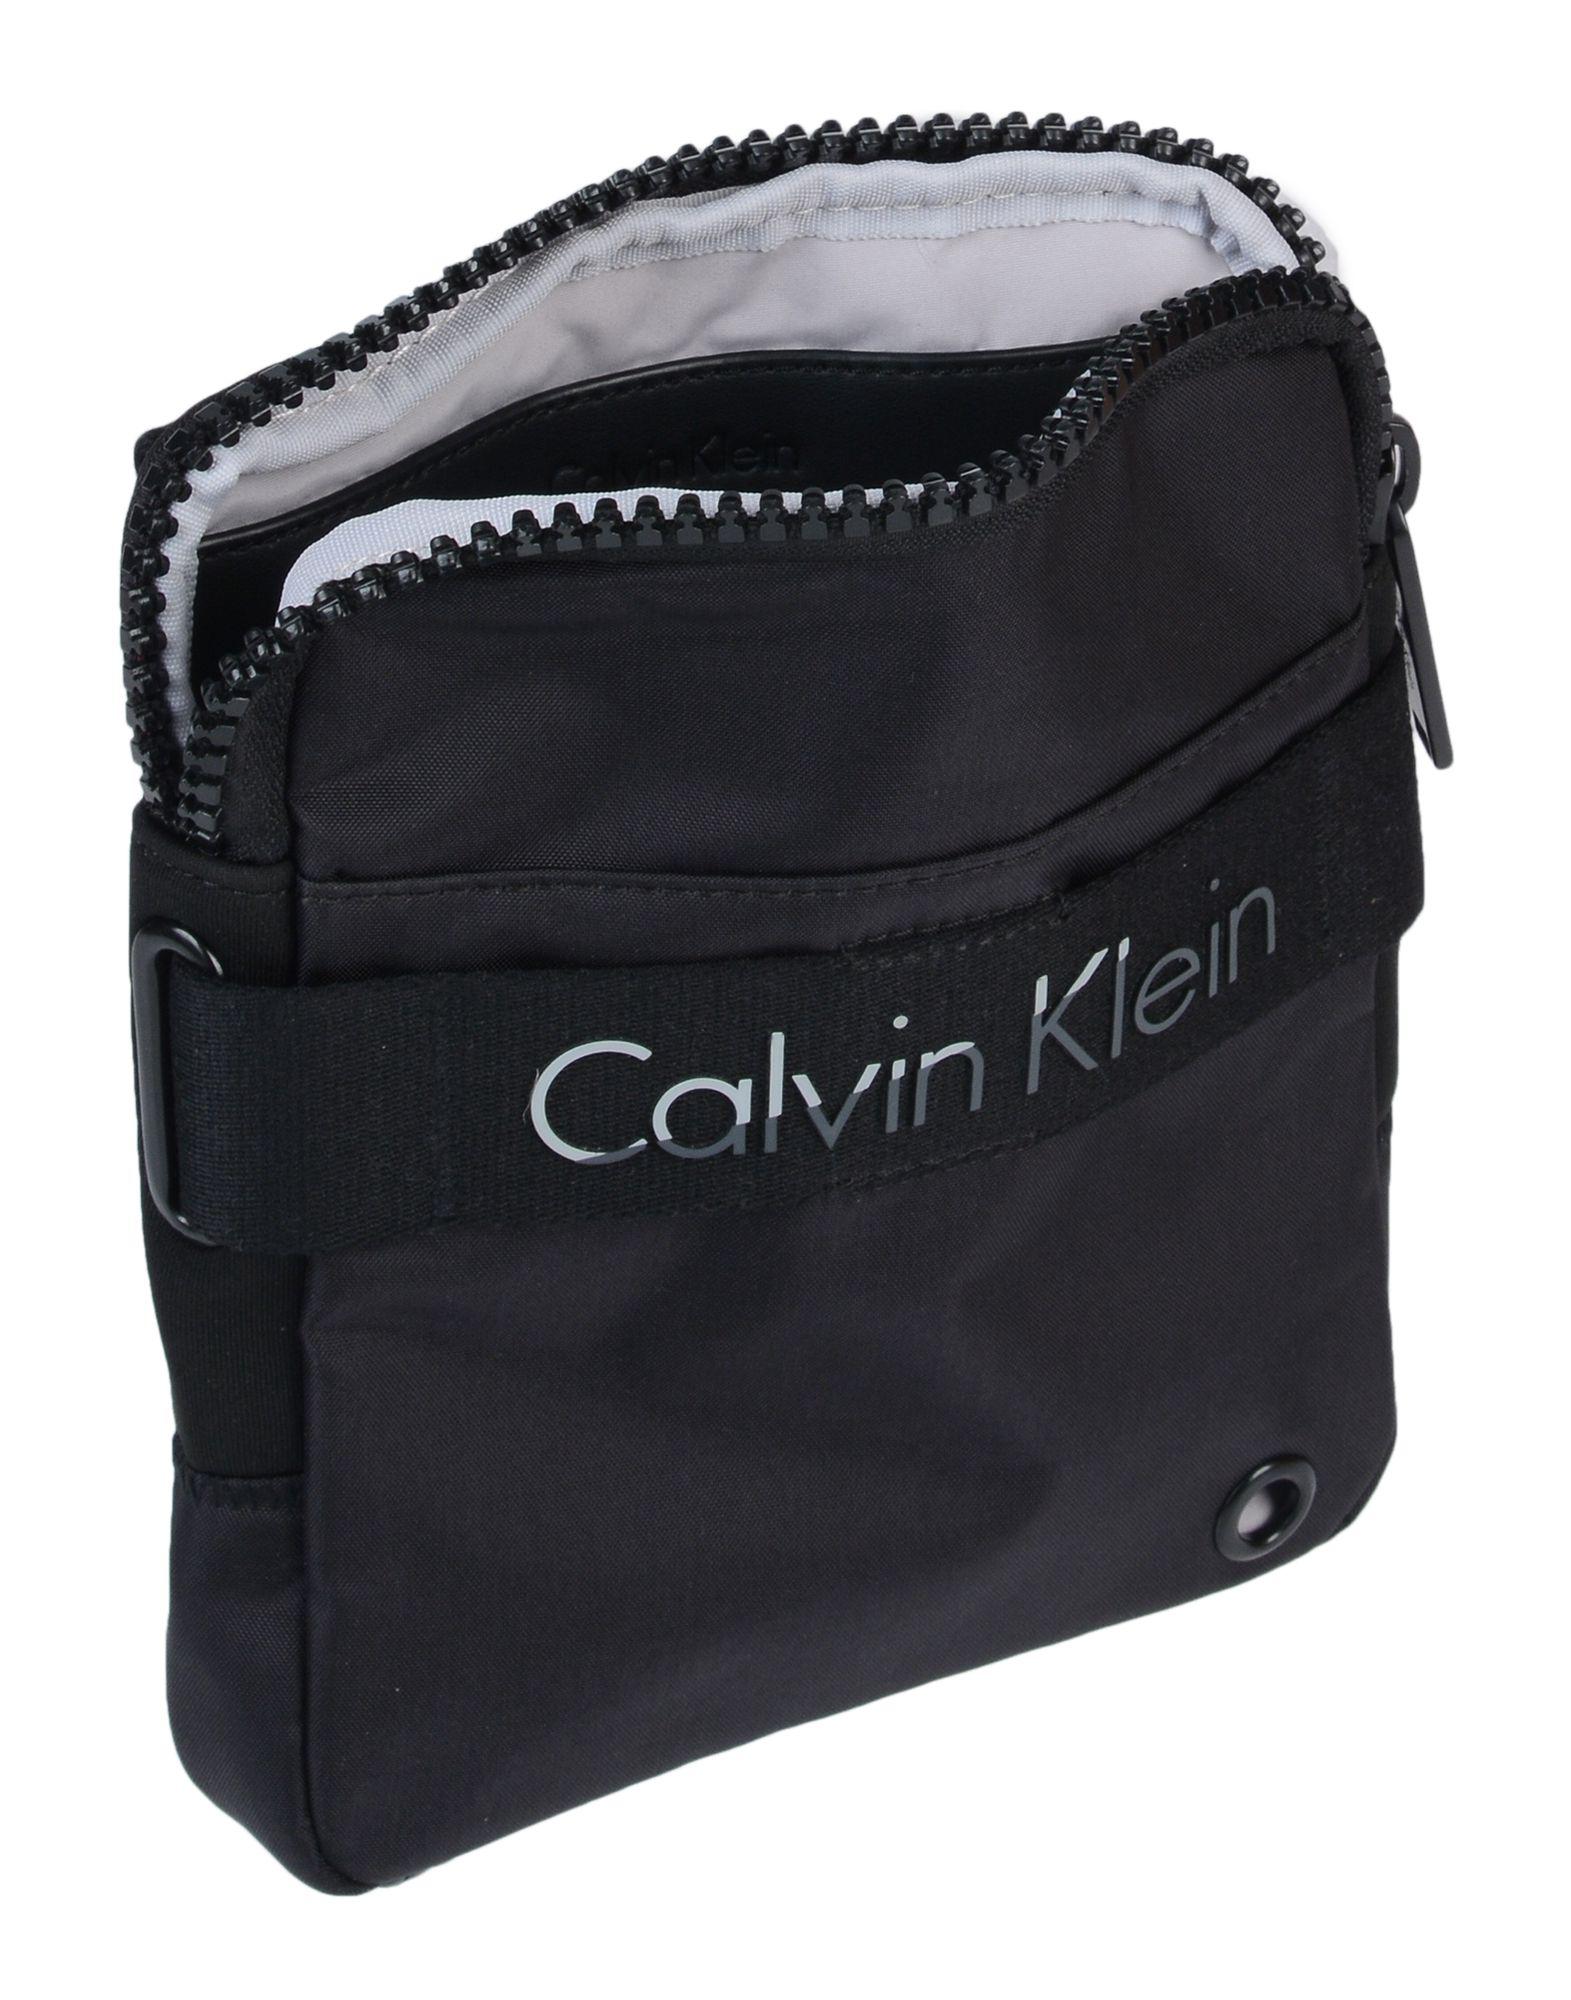 Calvin Klein Synthetic Cross-body Bag in Black for Men - Lyst